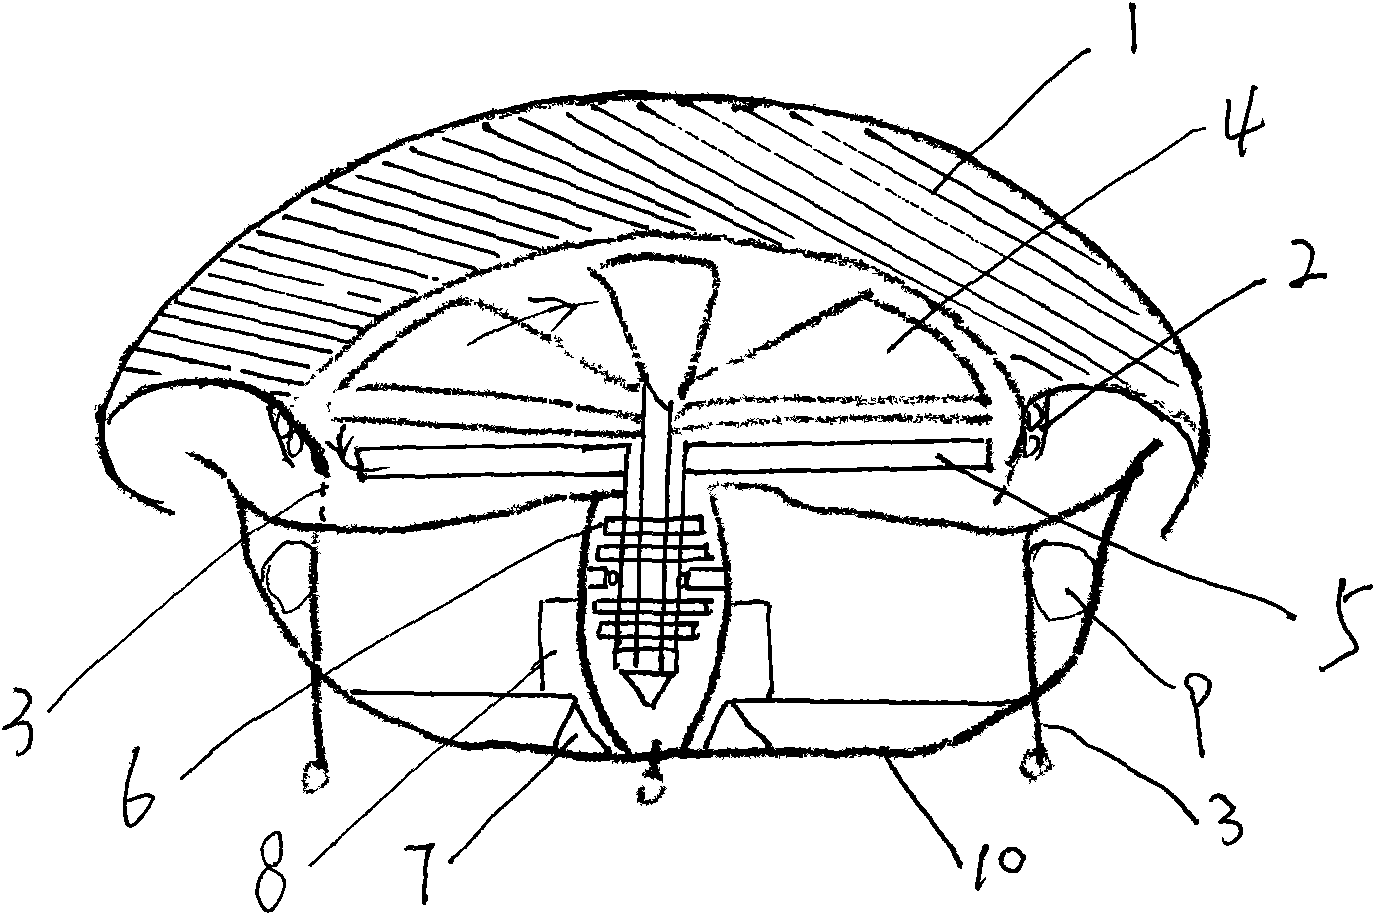 Aerospace flying saucer aircraft